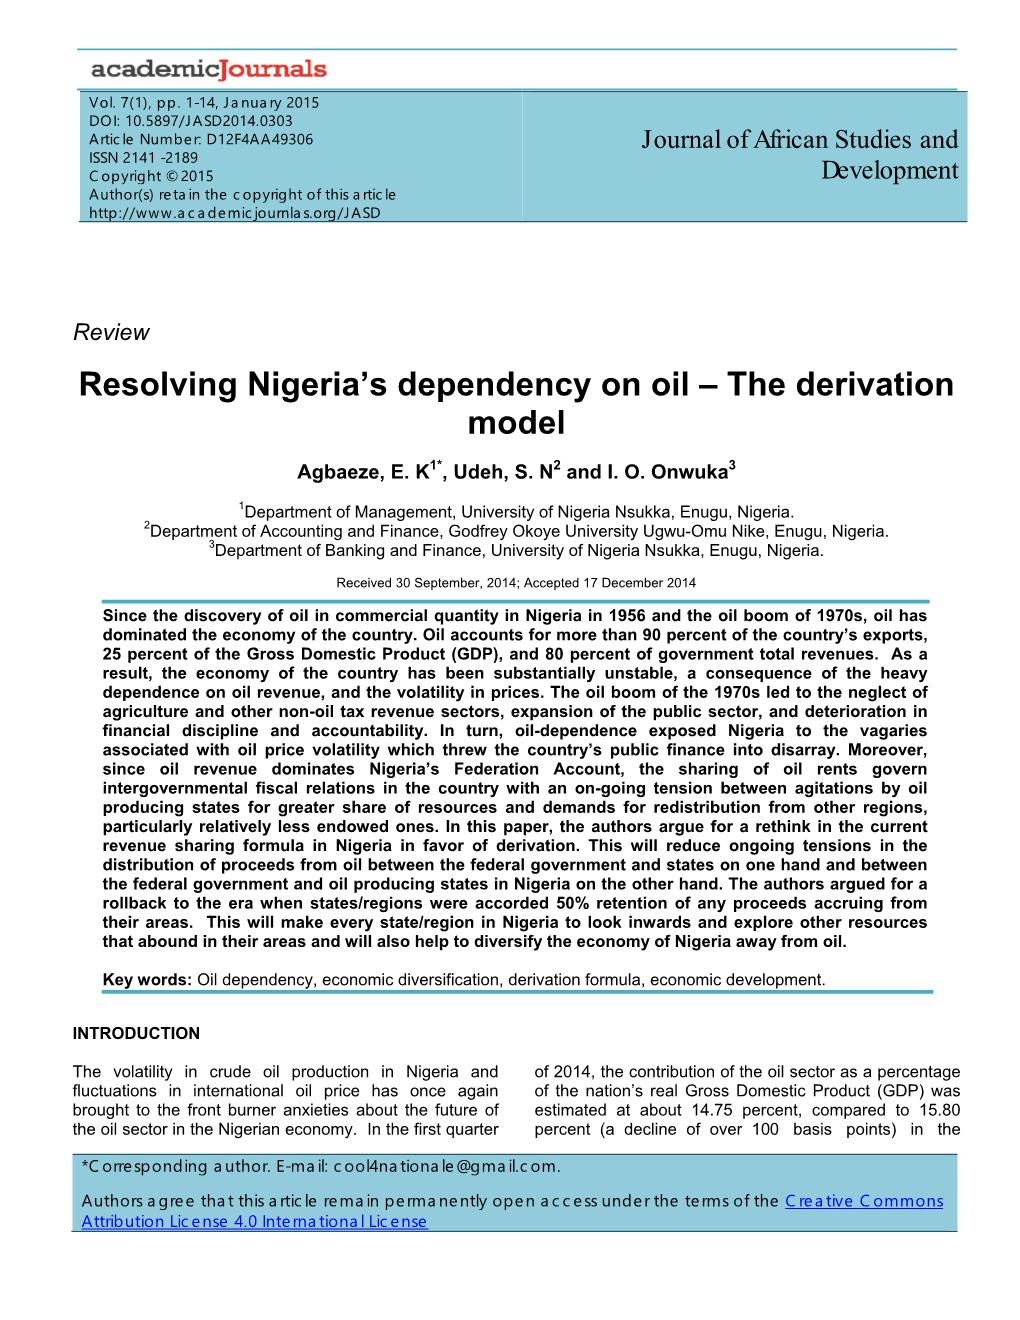 Resolving Nigeria's Dependency On